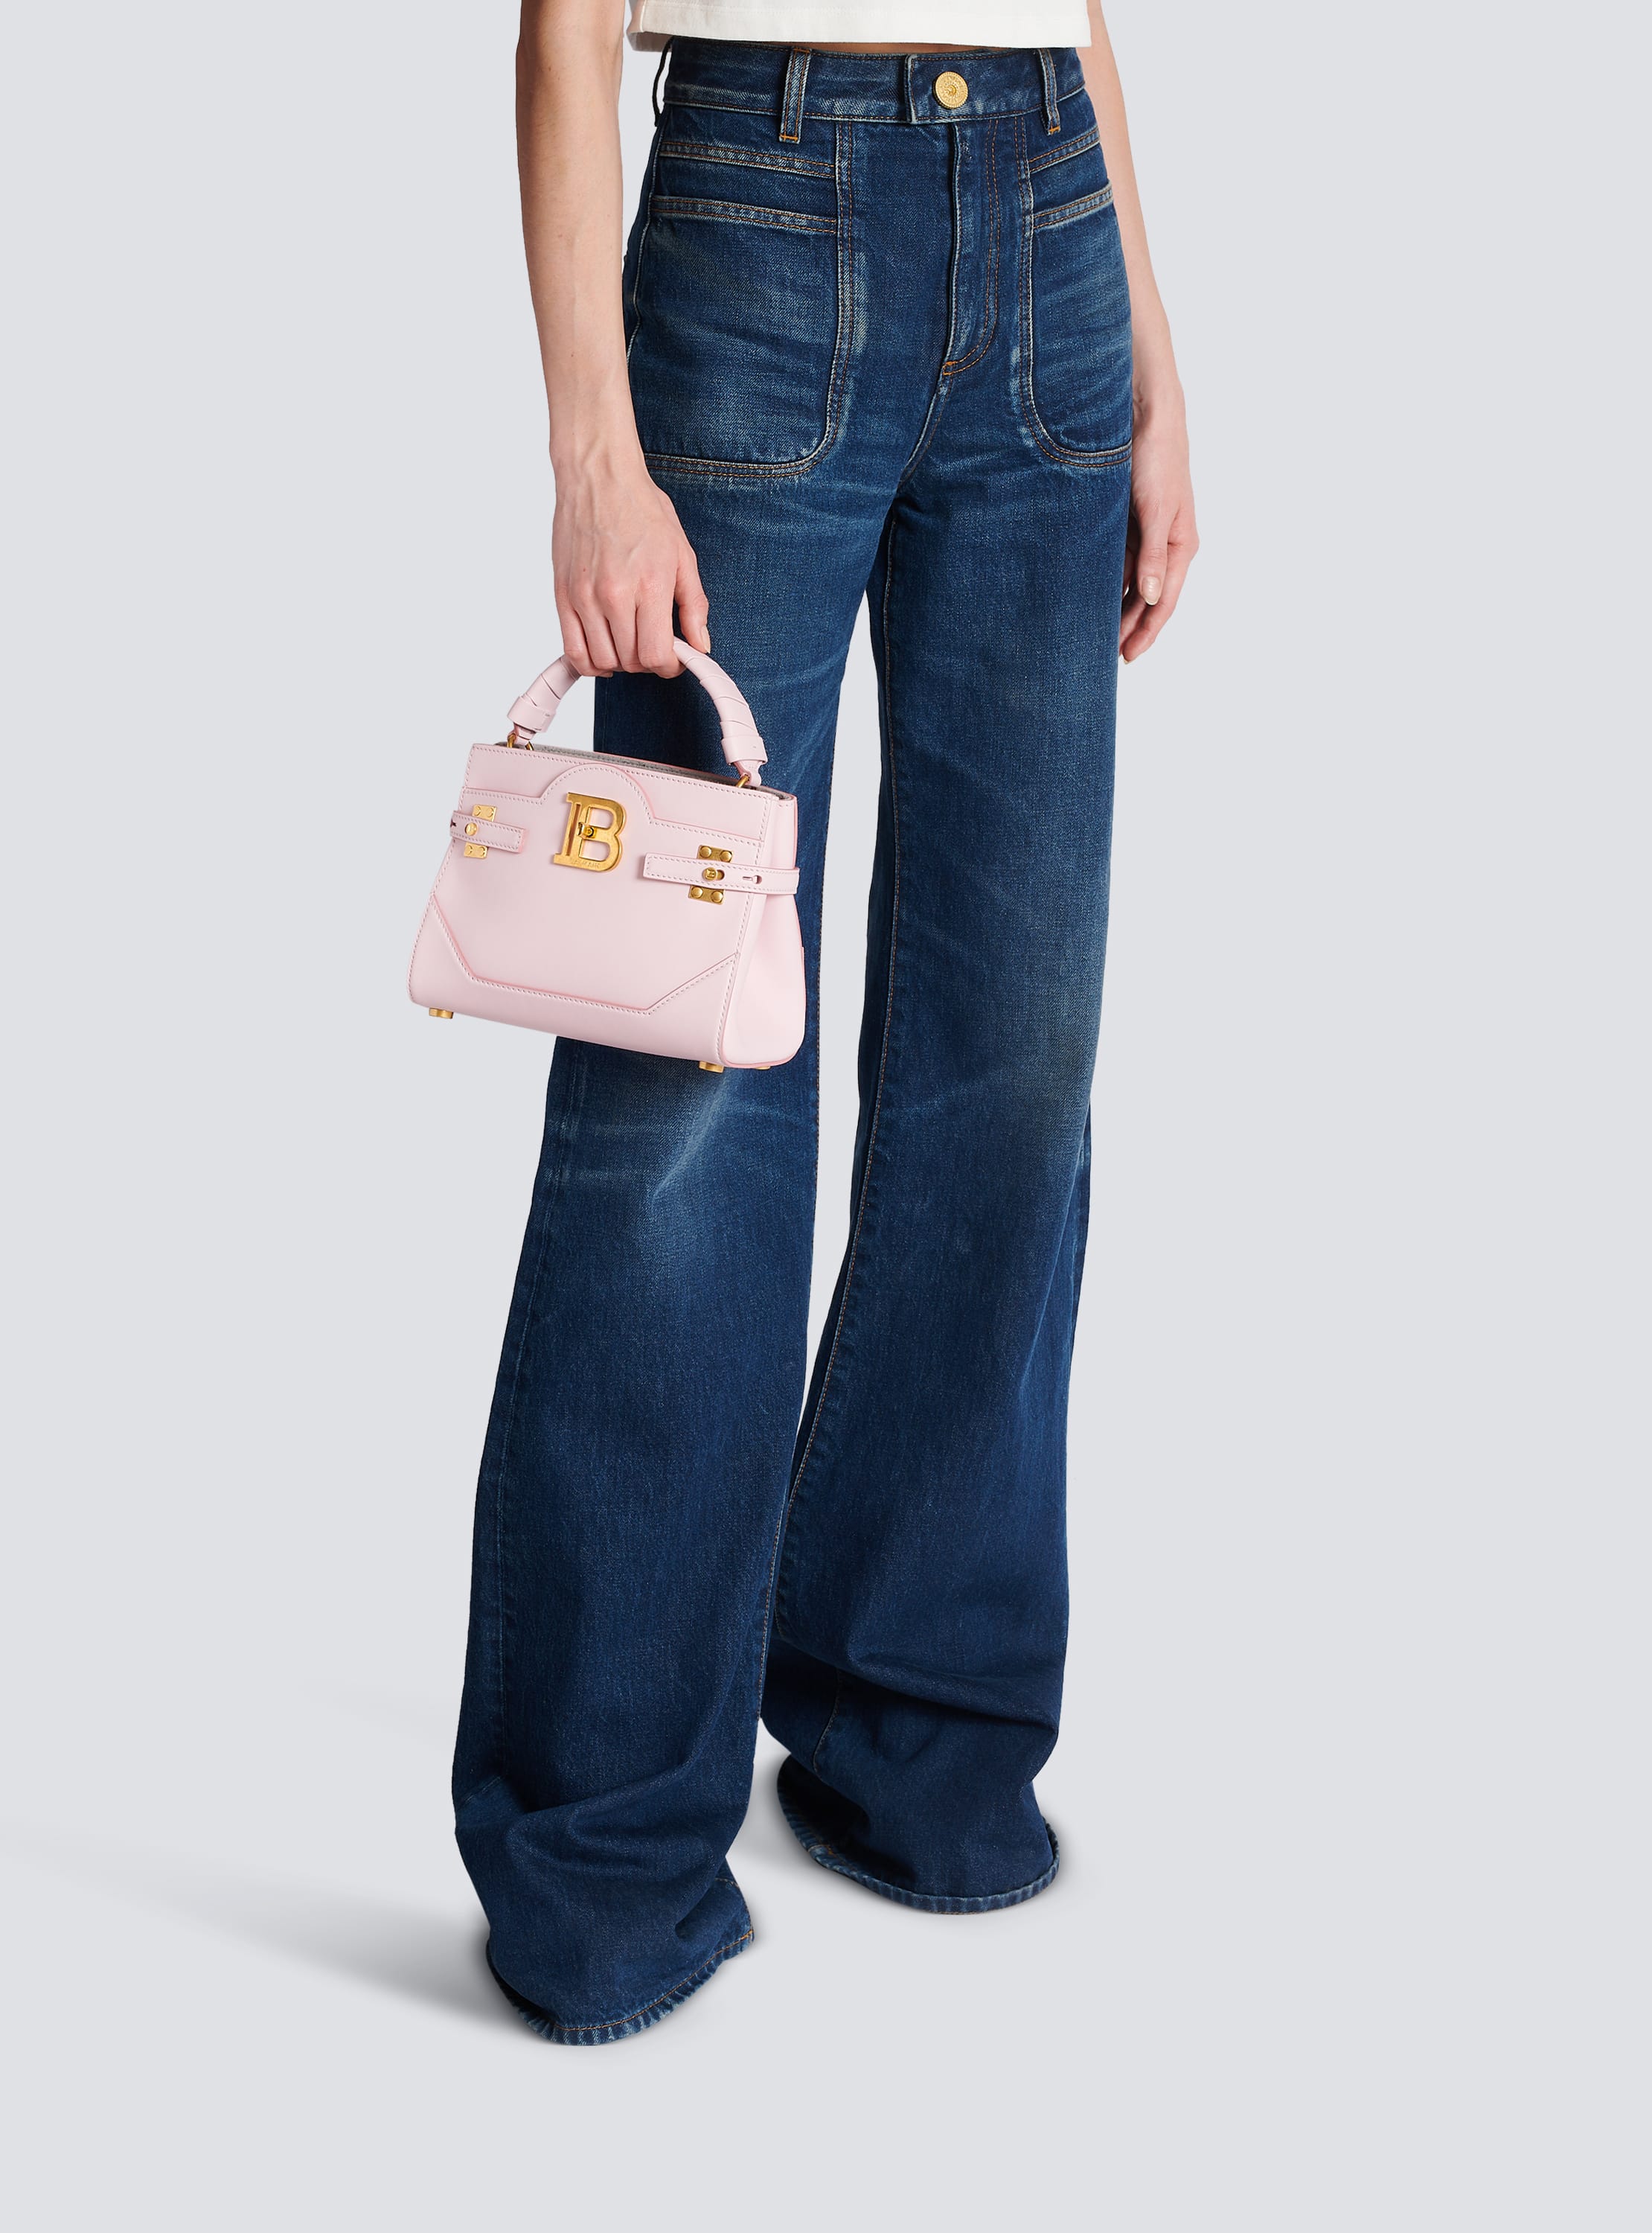 BALMAIN: B-Buzz 22 bag in leather - Pink  Balmain handbag BN1DA797LAVE  online at